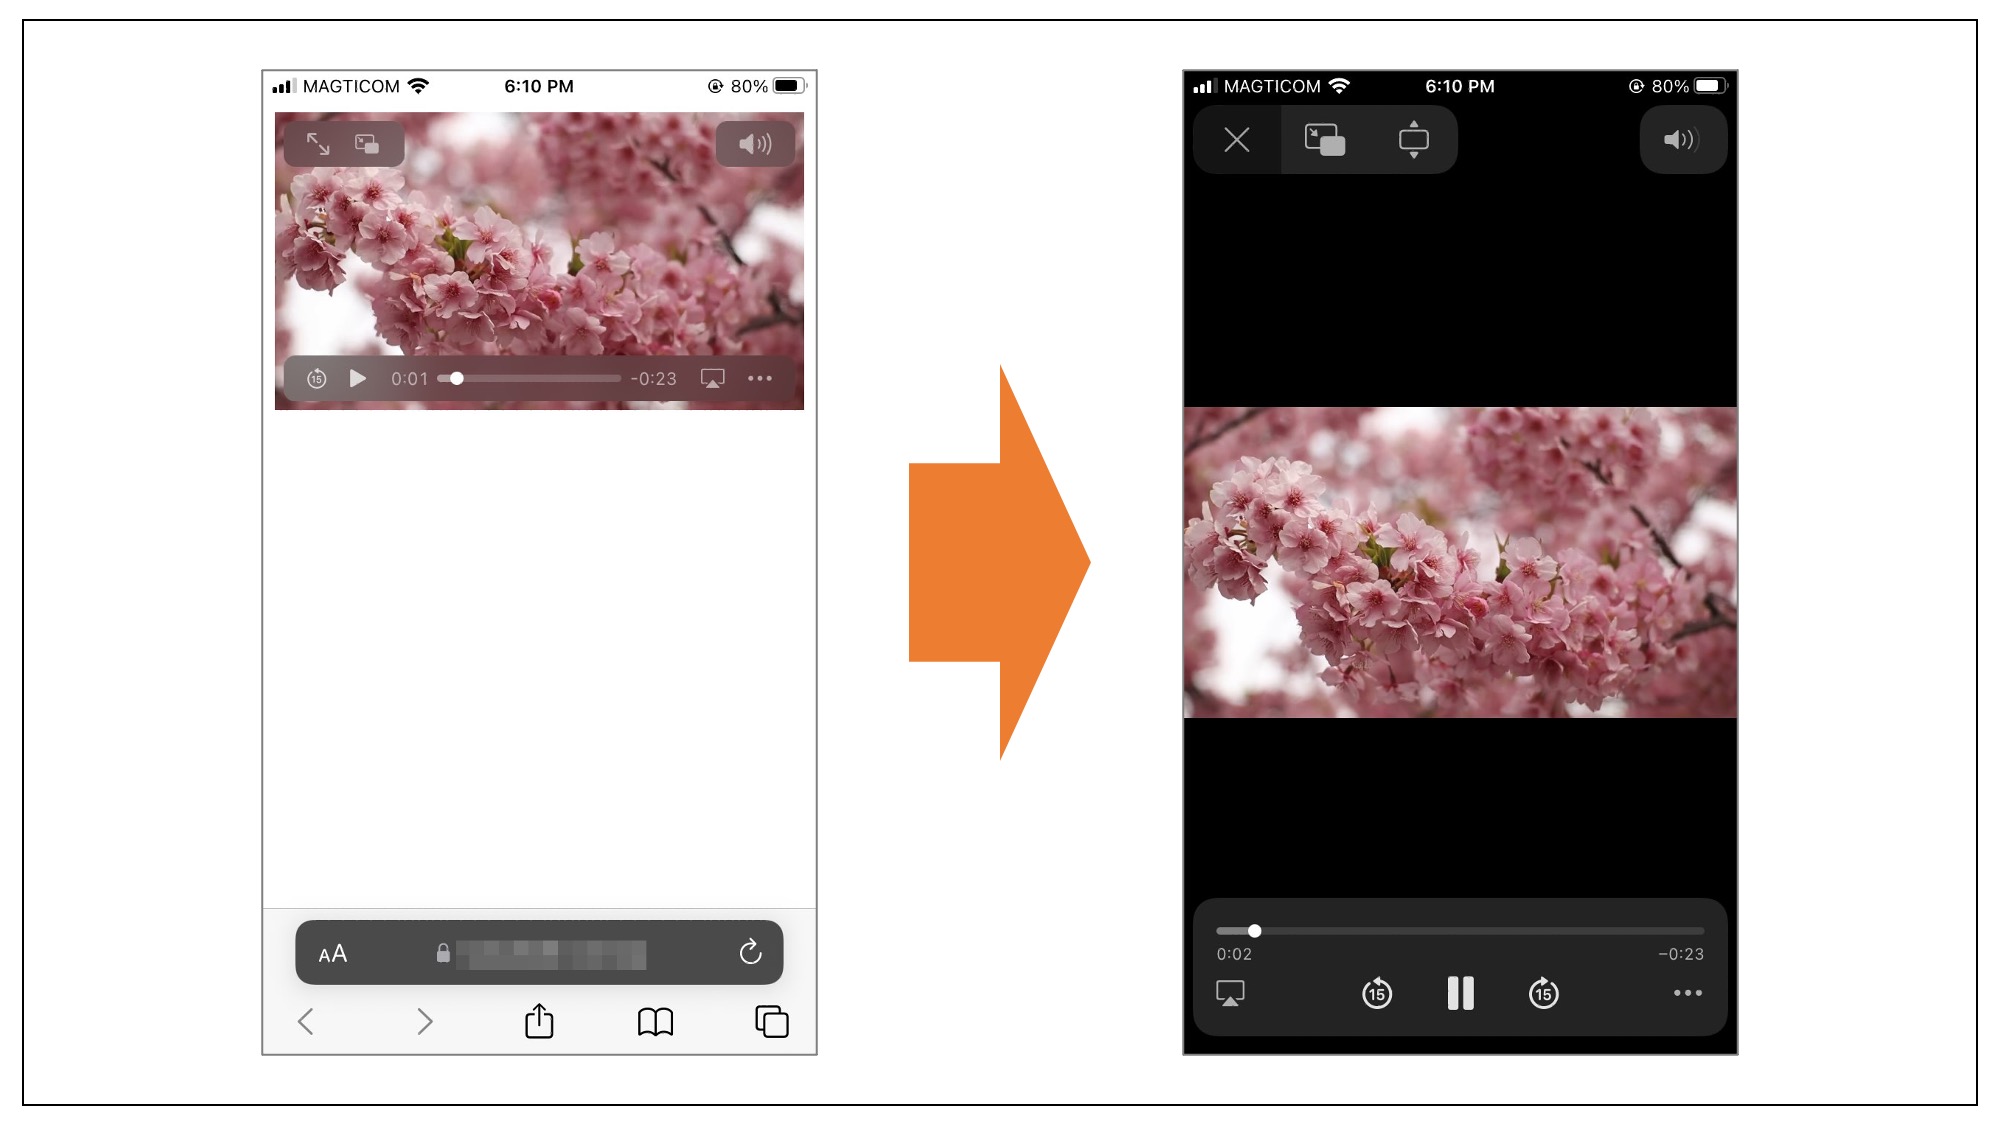 iOSのSafariなどで動画を再生するとデフォルトでは拡大画面で動画が表示されるようになっている